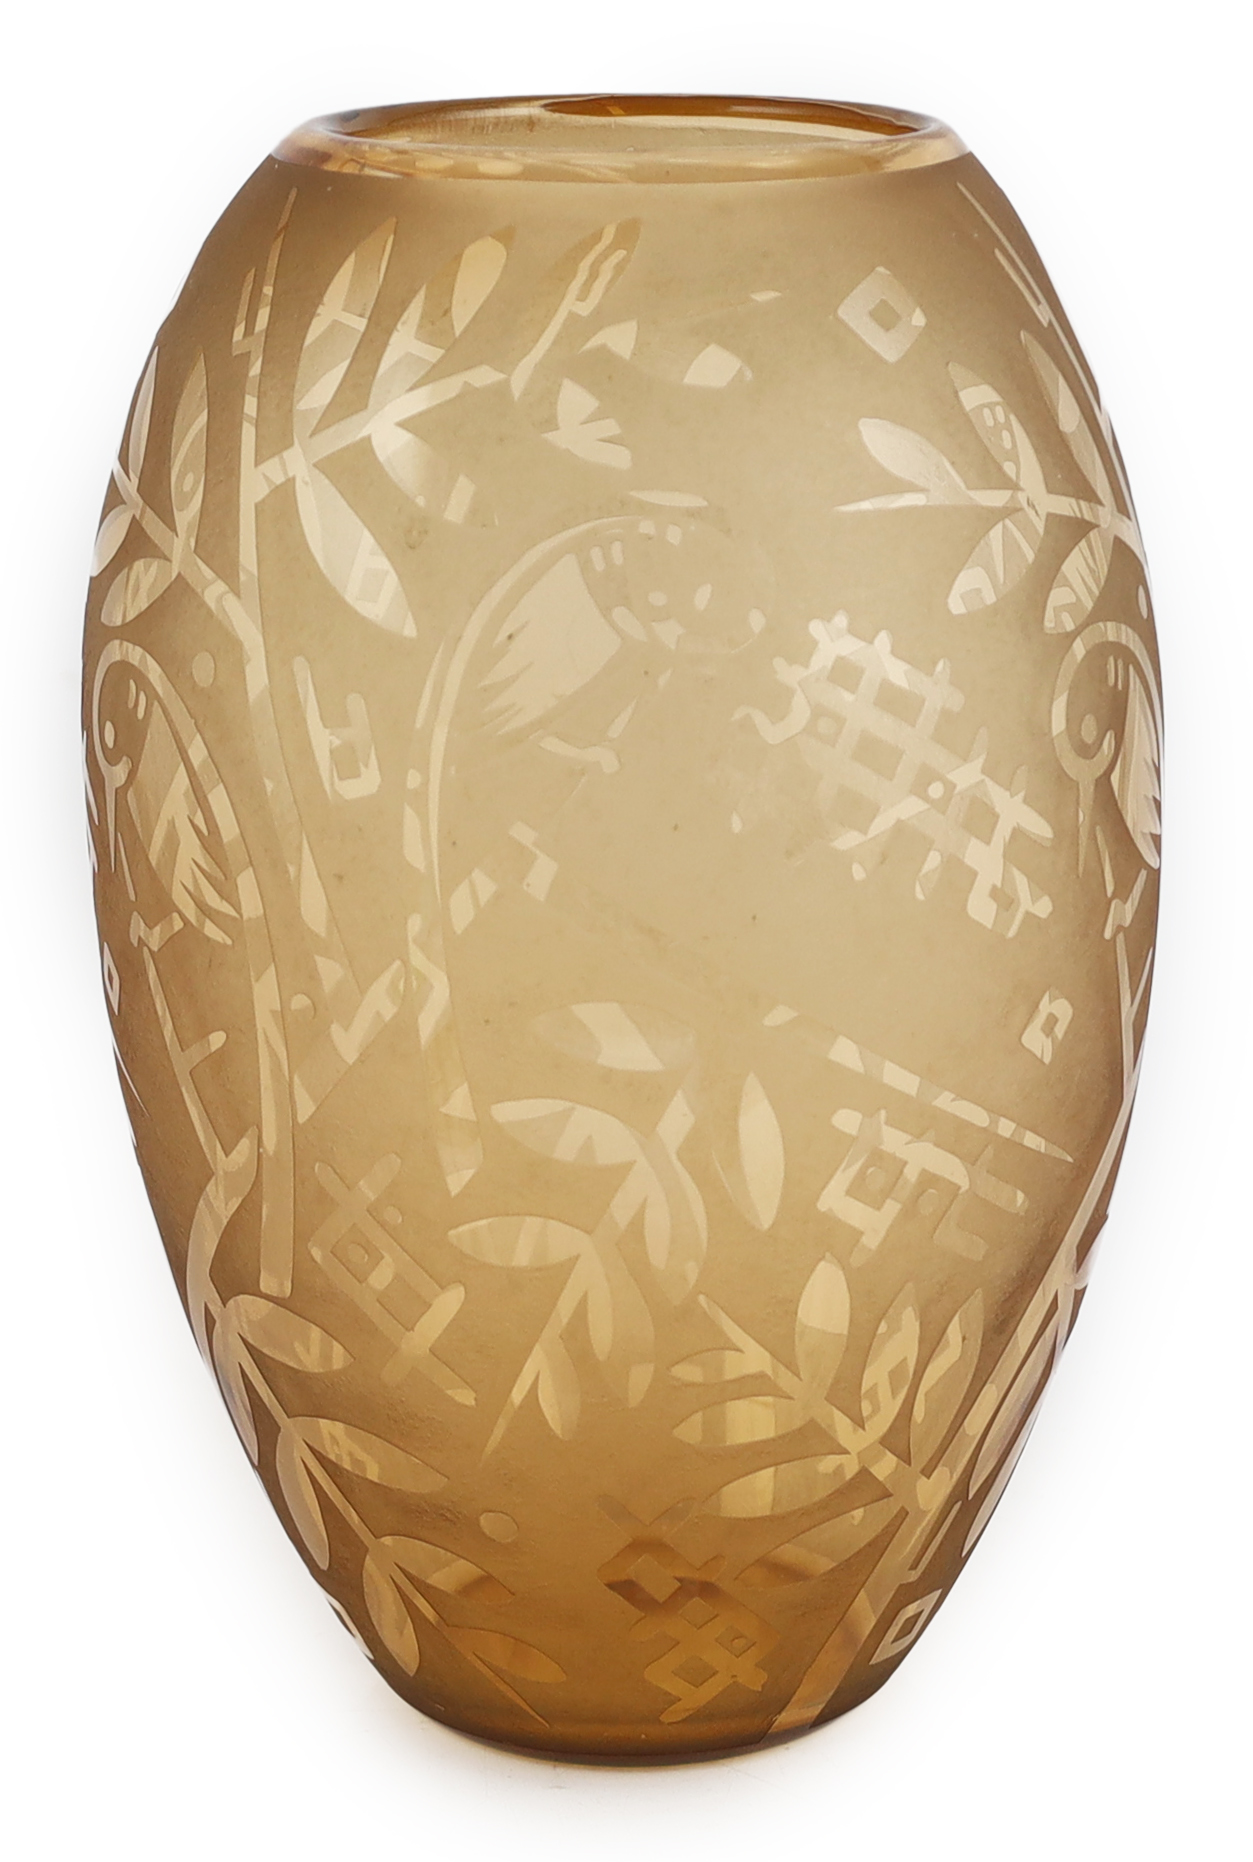 A large Daum ‘Oiseaux Grande’ amber tinted glass vase